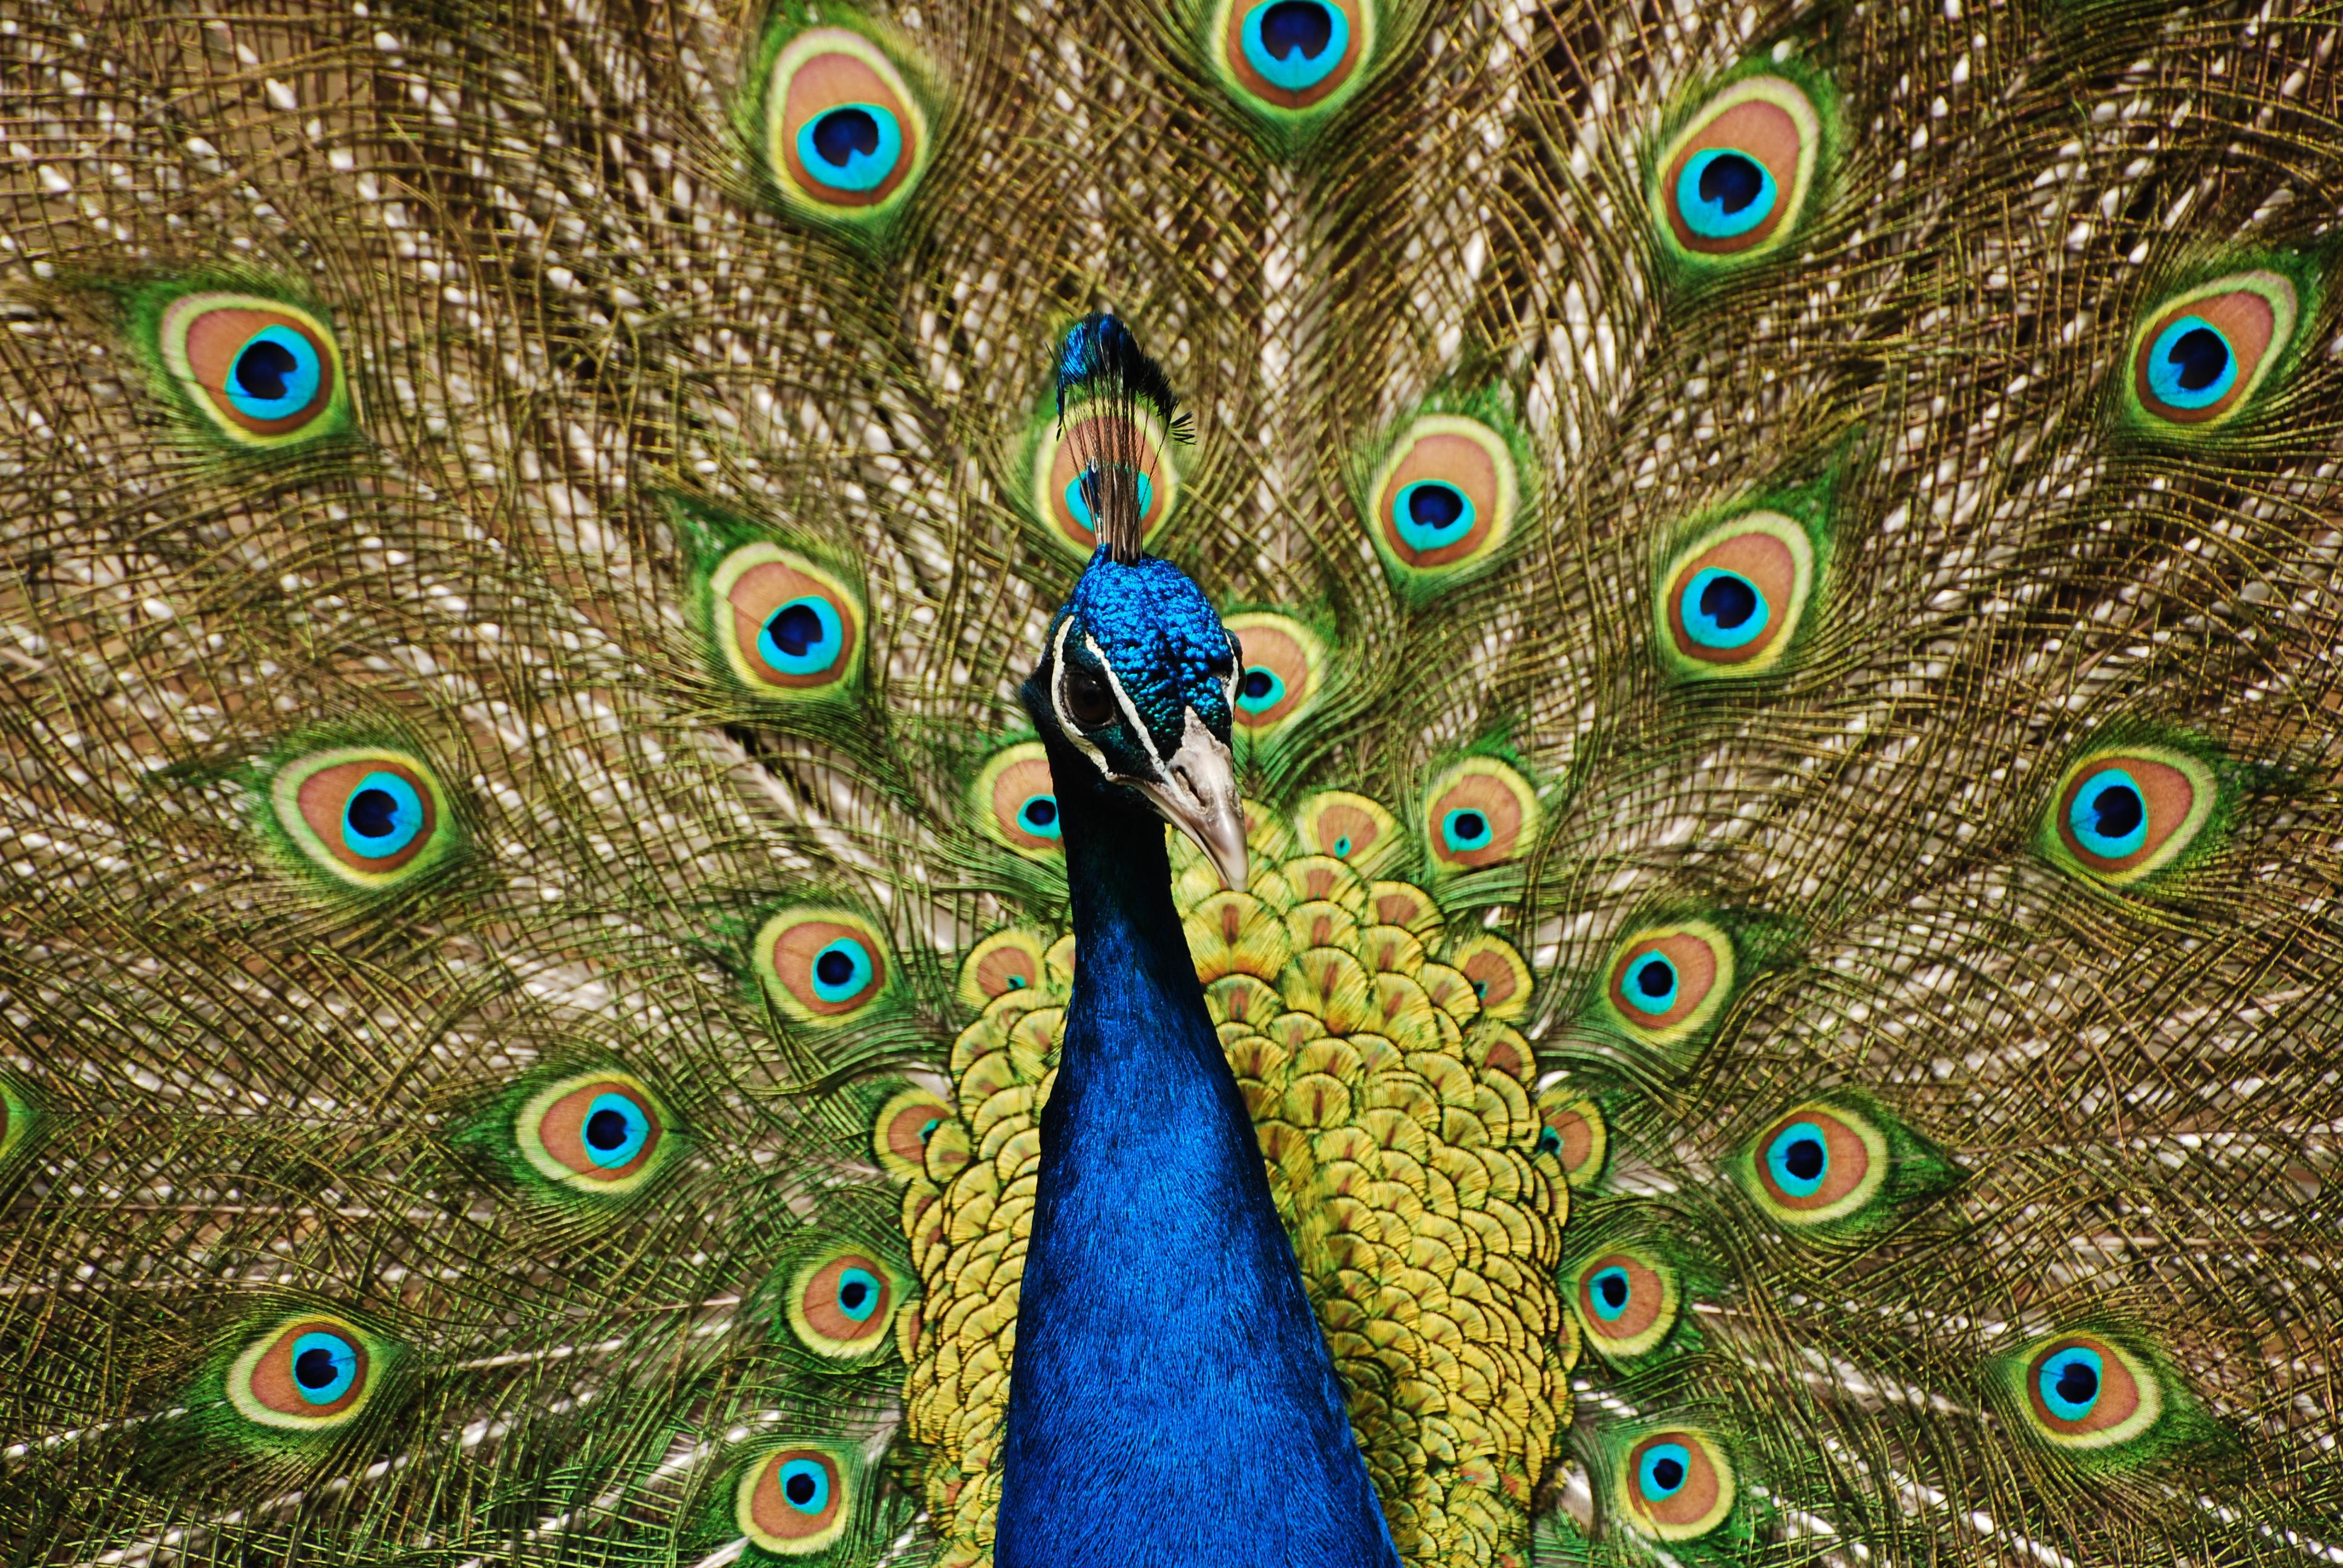 Elegant Peacock 4k Ultra HD Wallpaper | Background Image ...